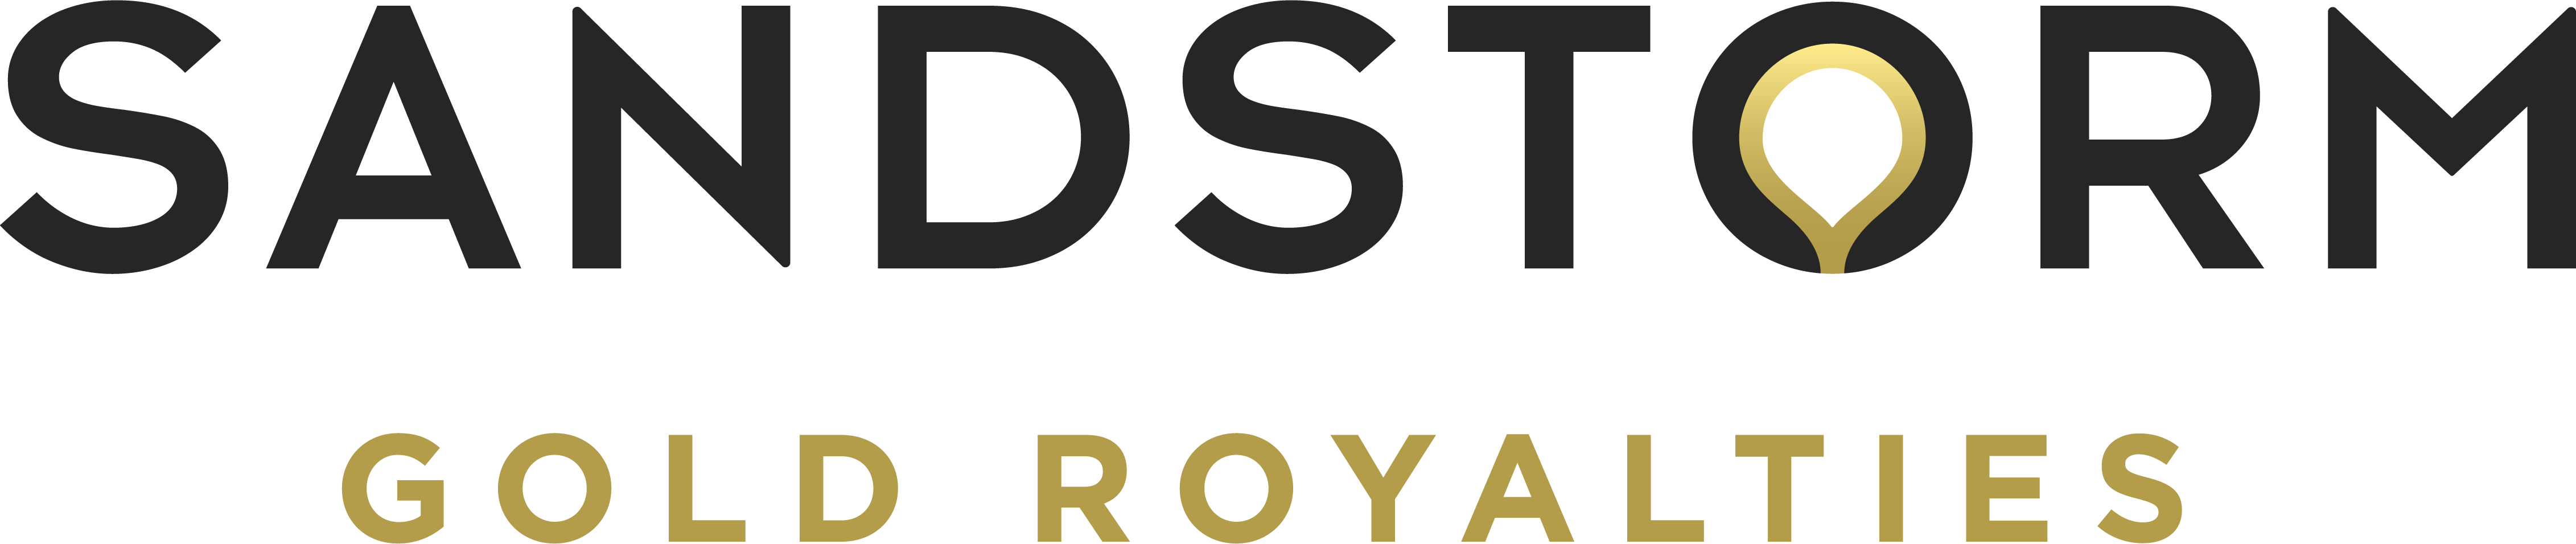 Sandstorm Gold Royalties logo